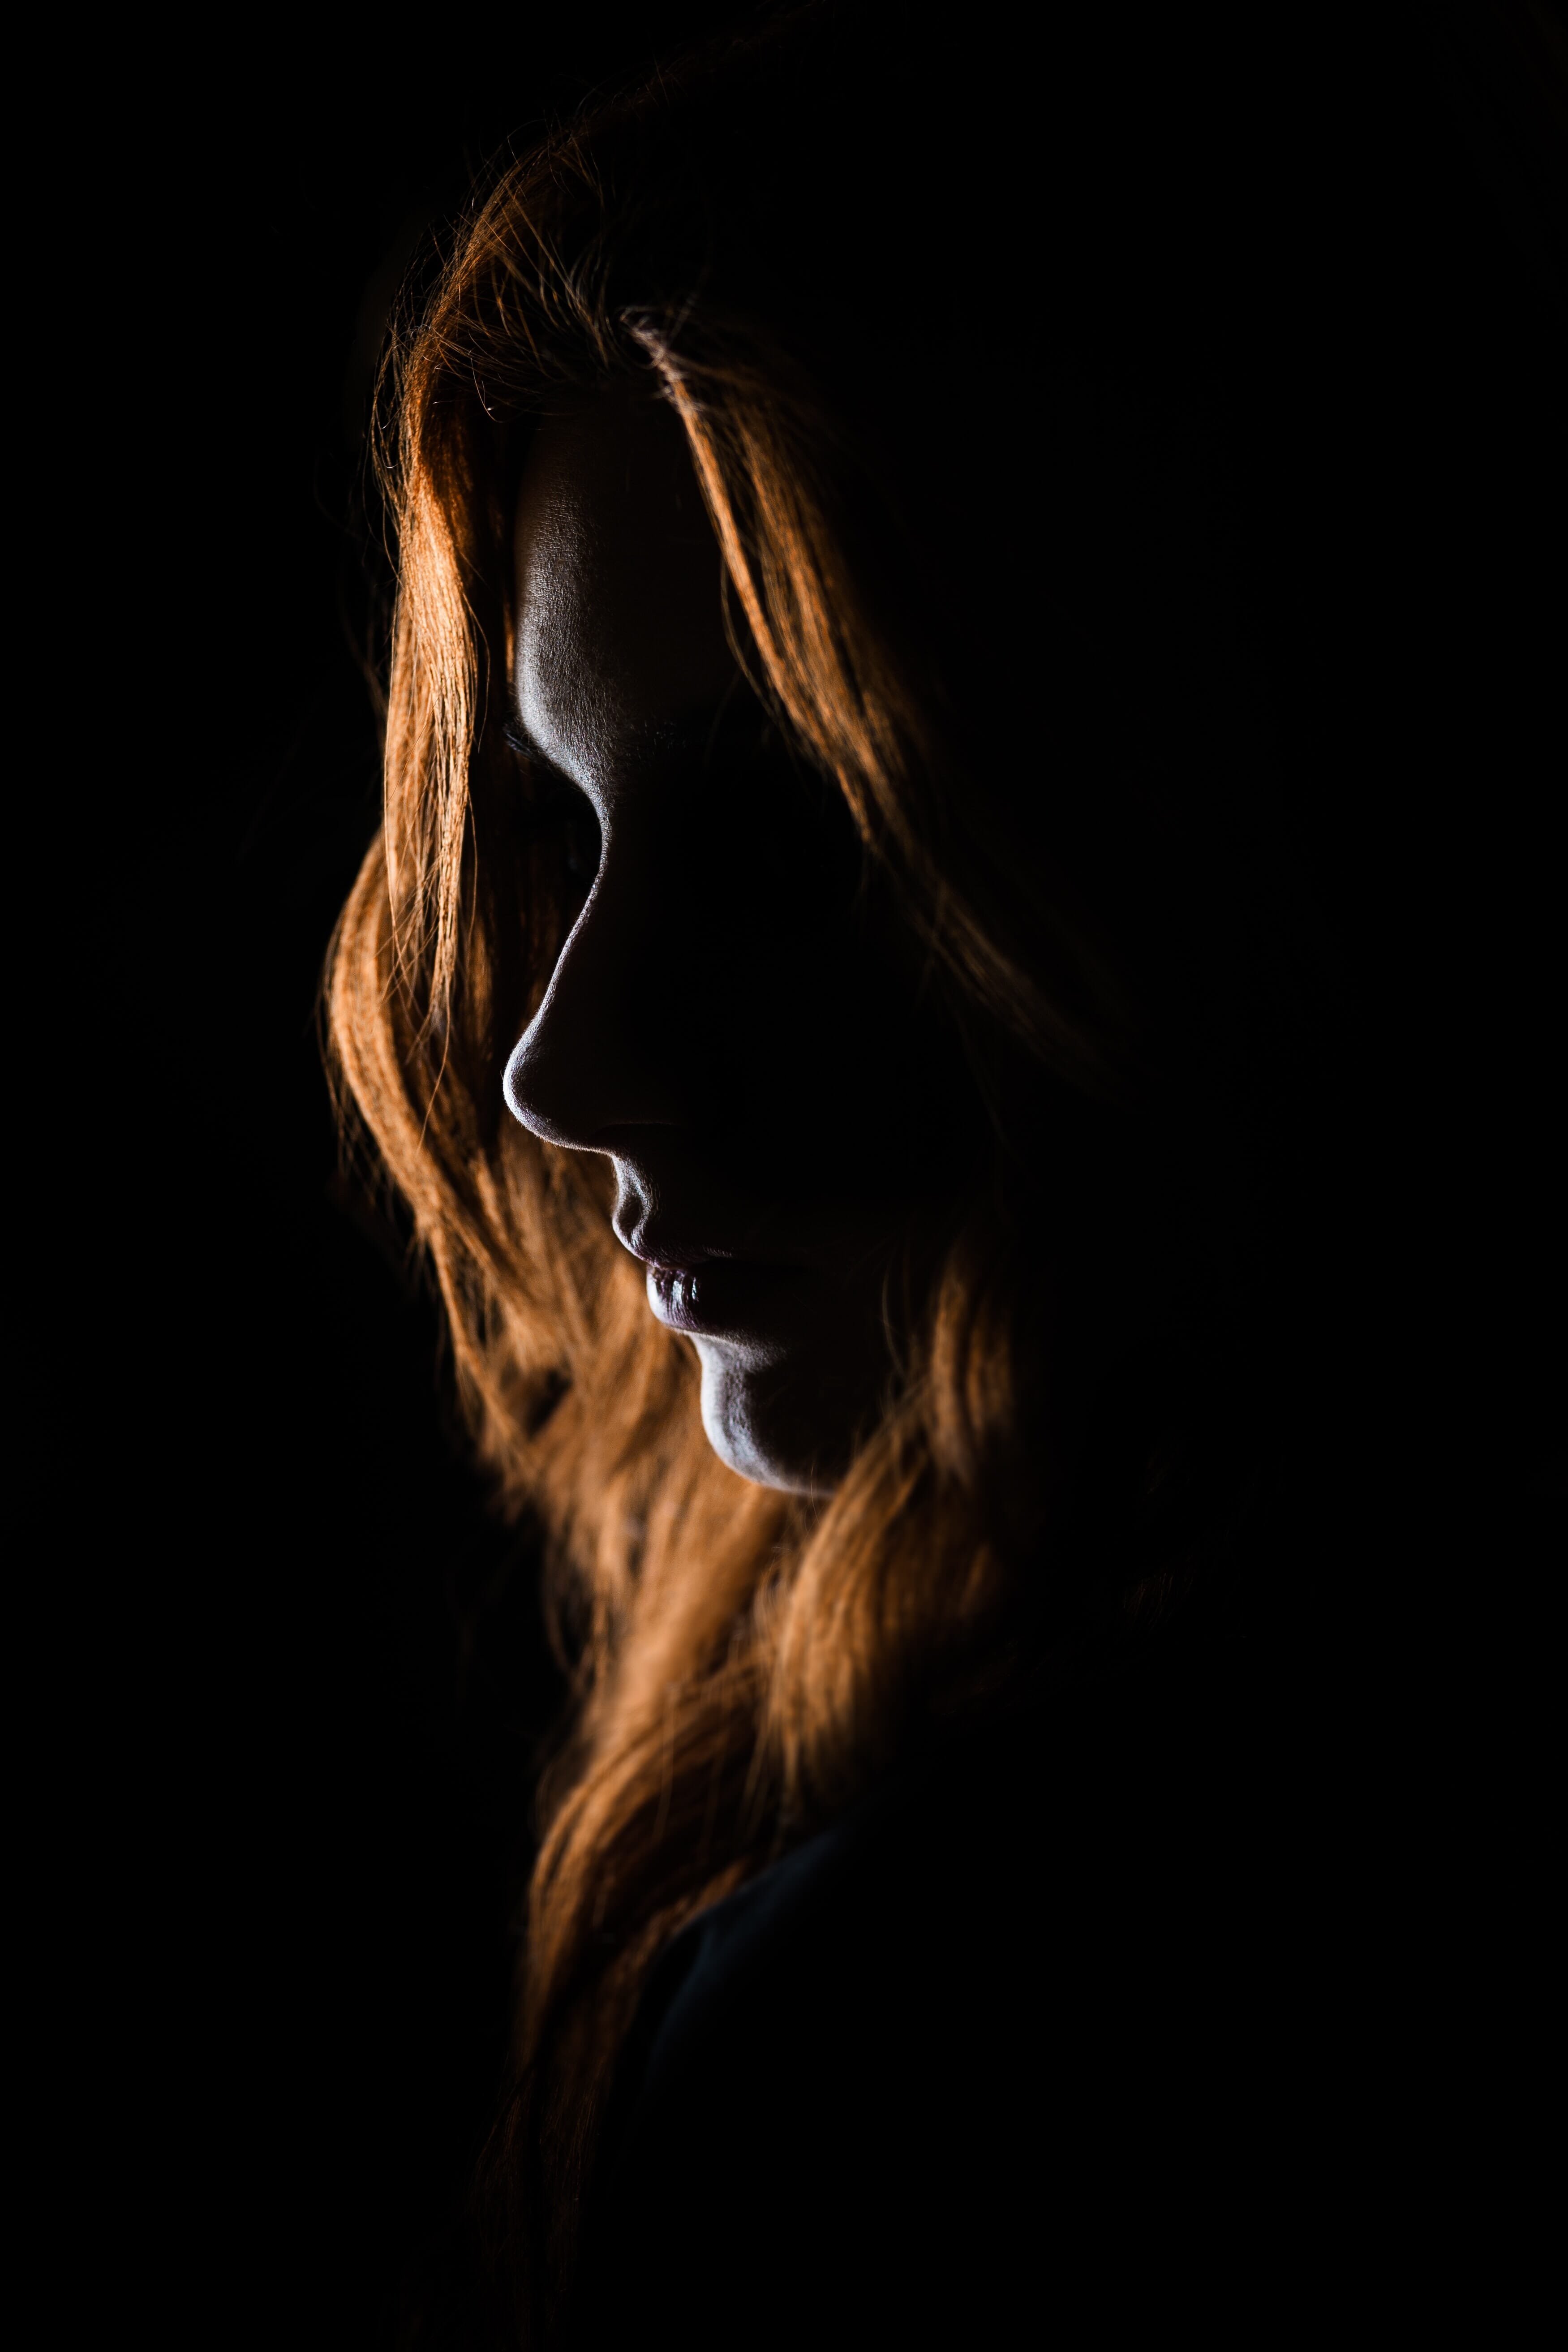 Portrait Photography Lighting (4 Must Know Light Set-ups)